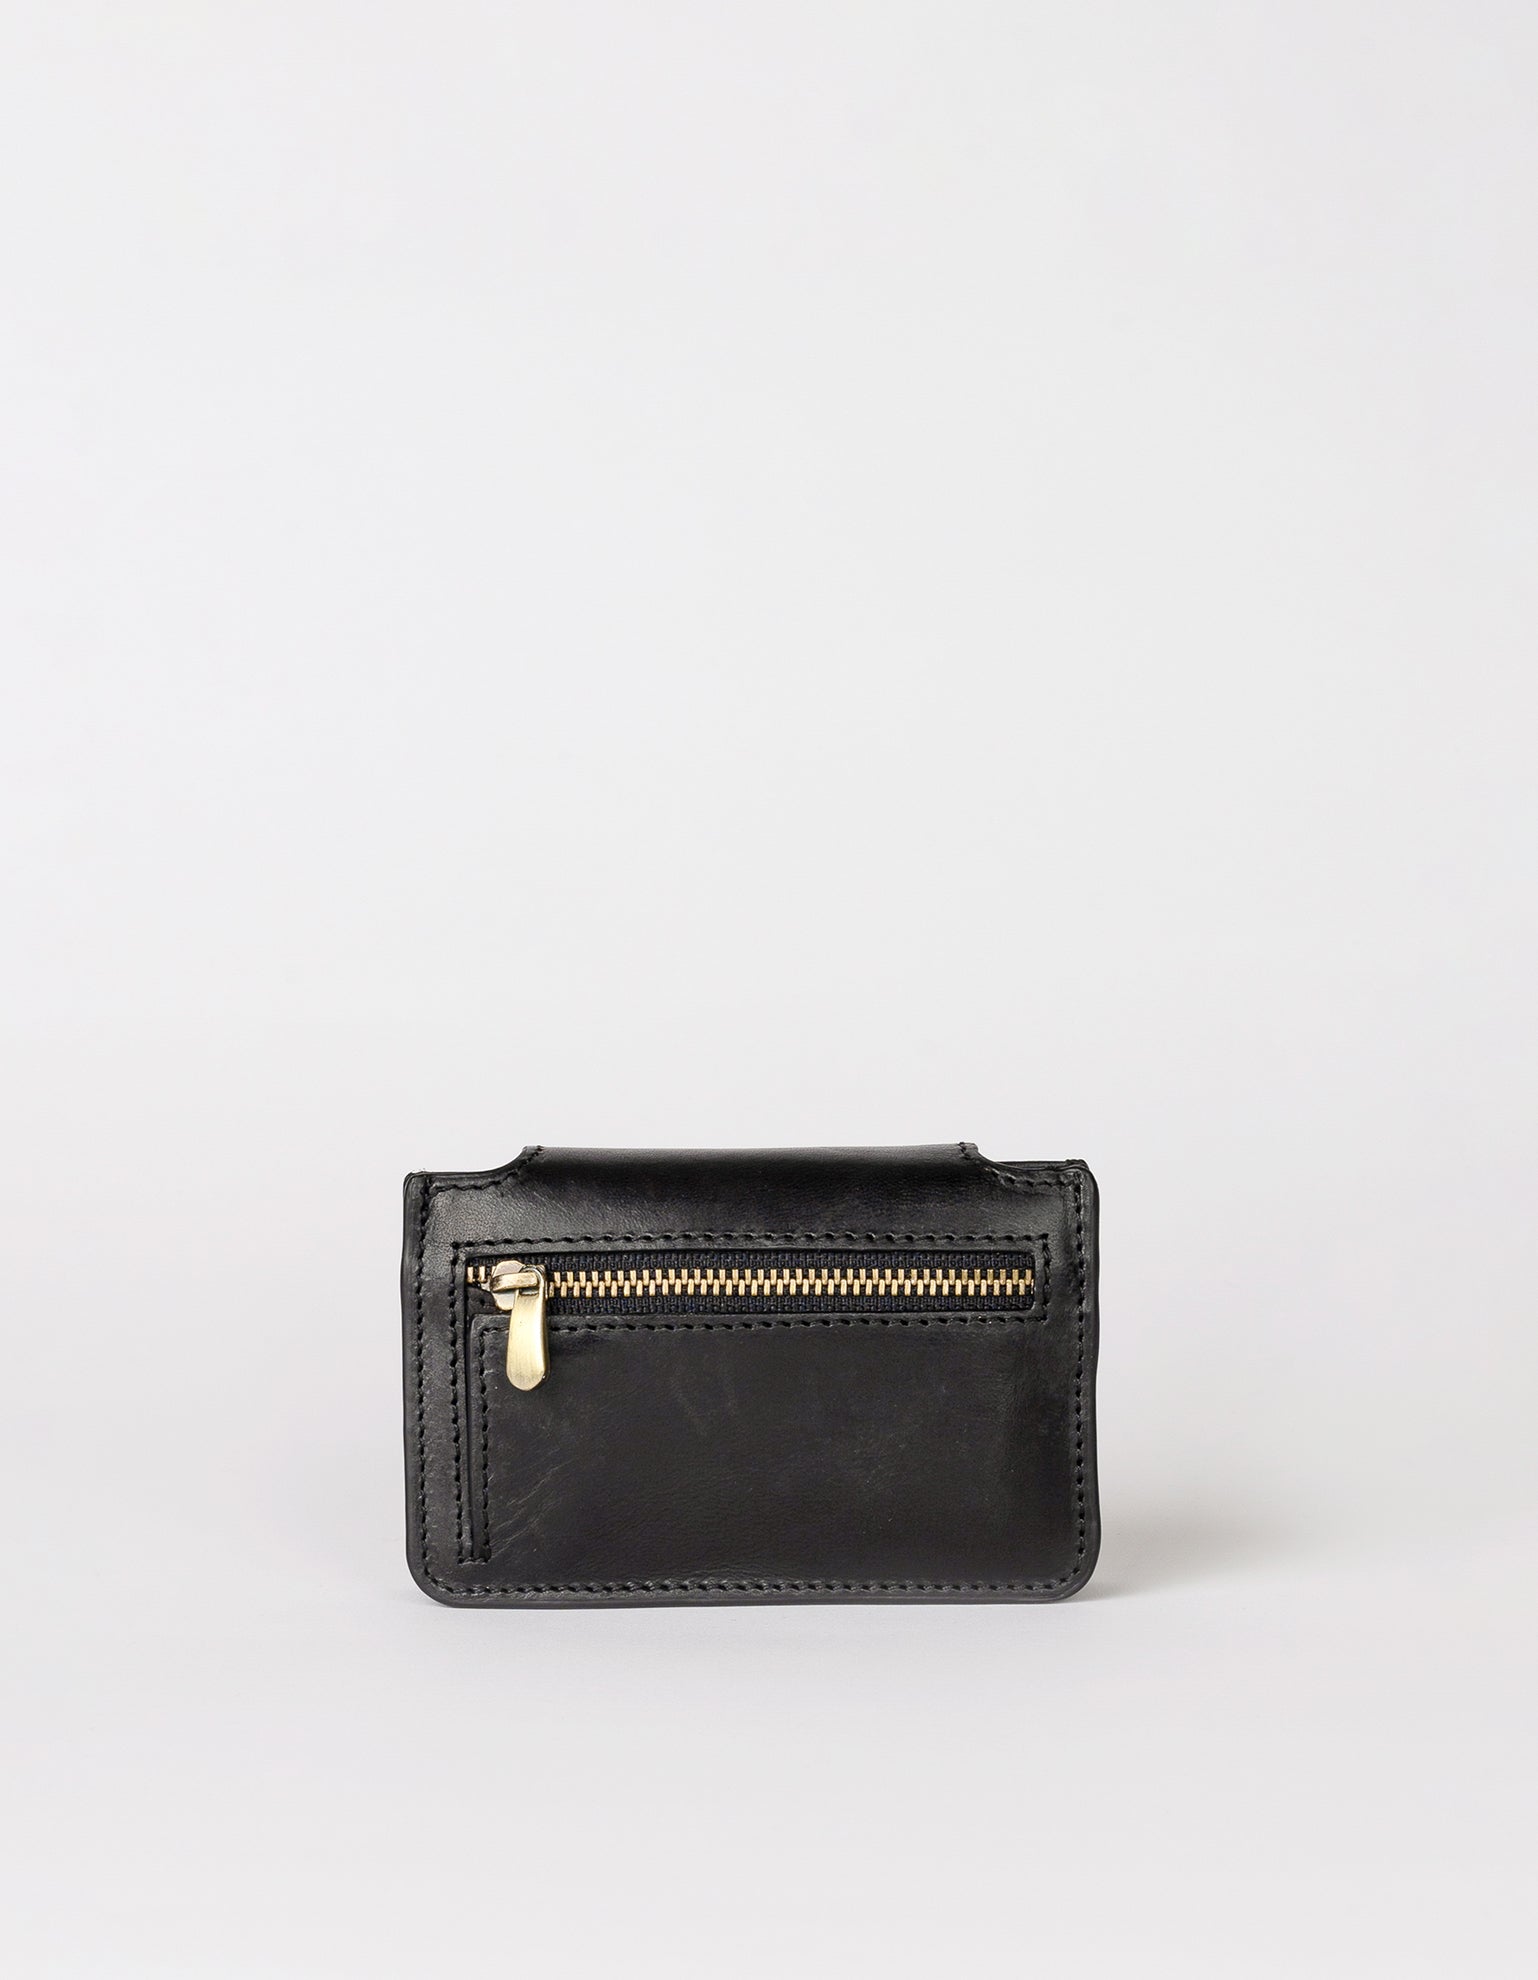 Passport Holder - Black Classic leather